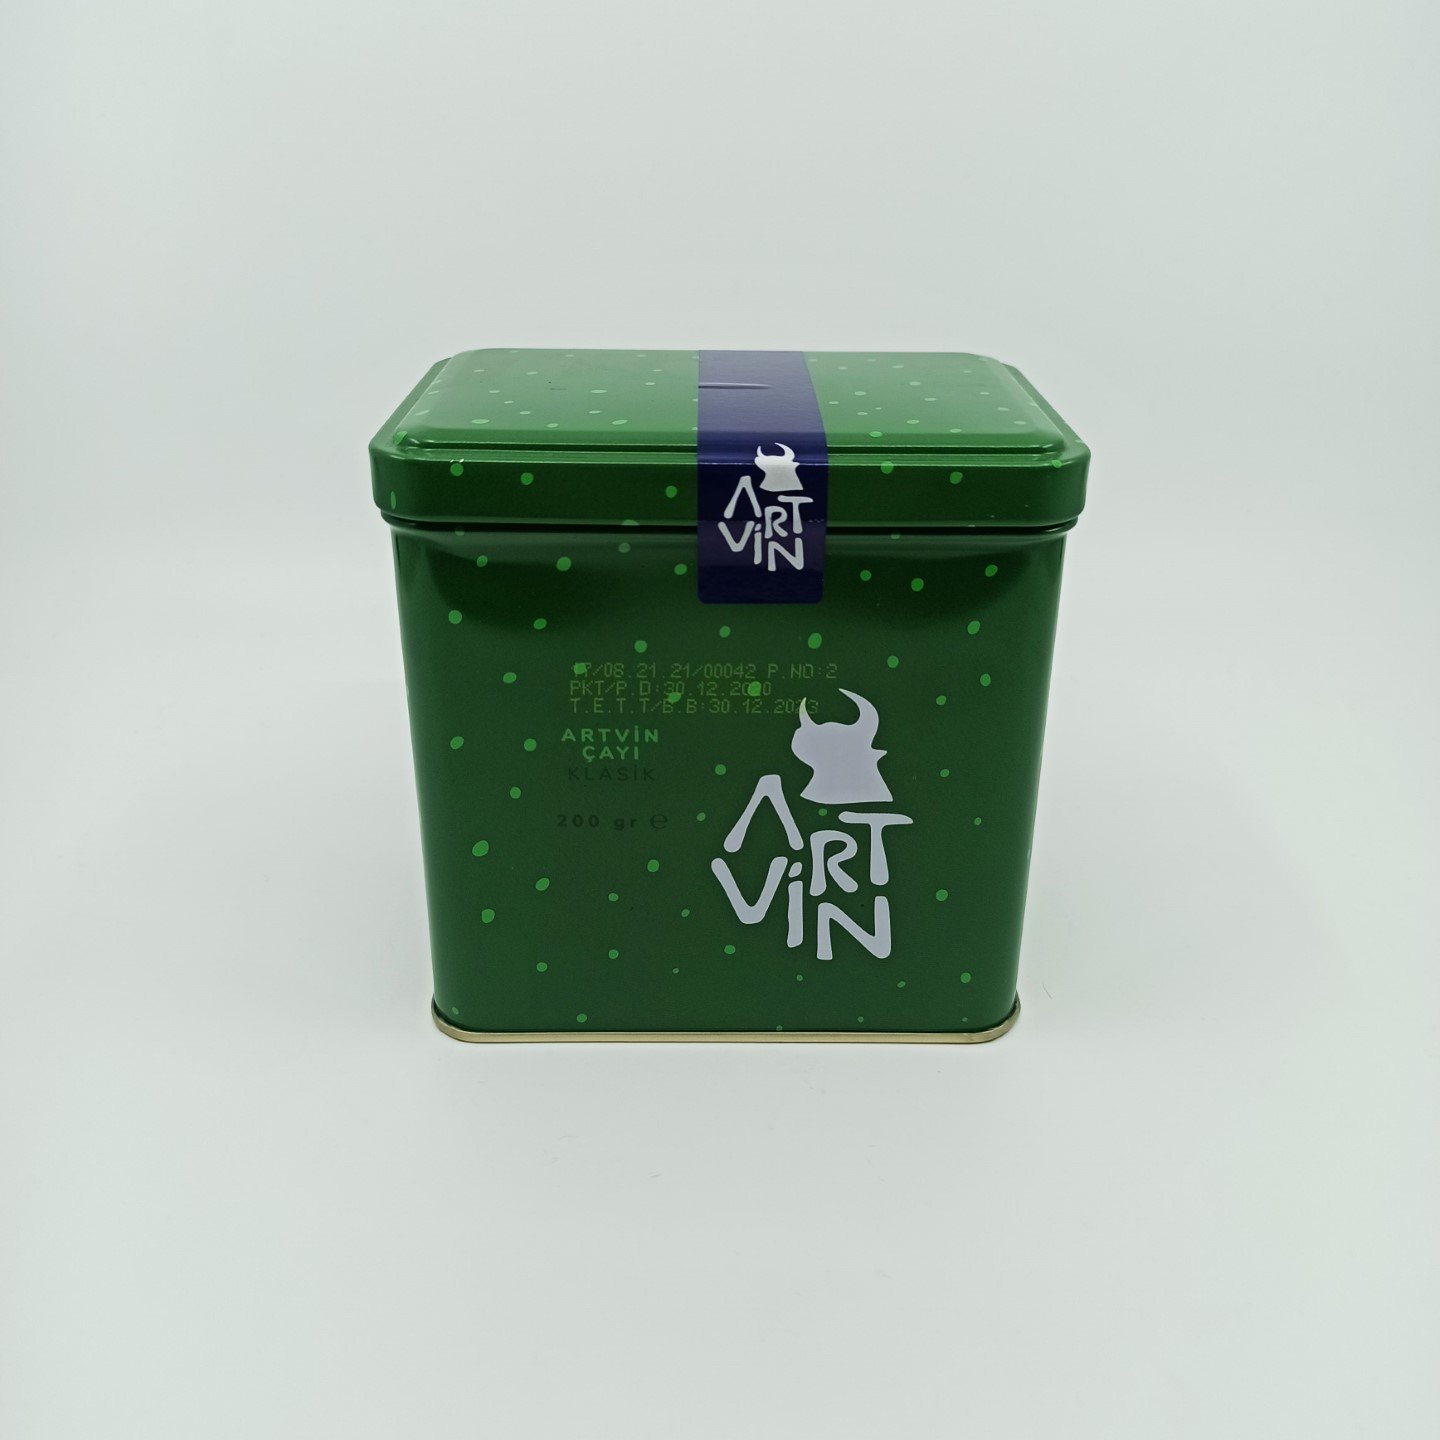 A Kalite Artvin Çayı / 200 GR. Yeşil Metal Kutu